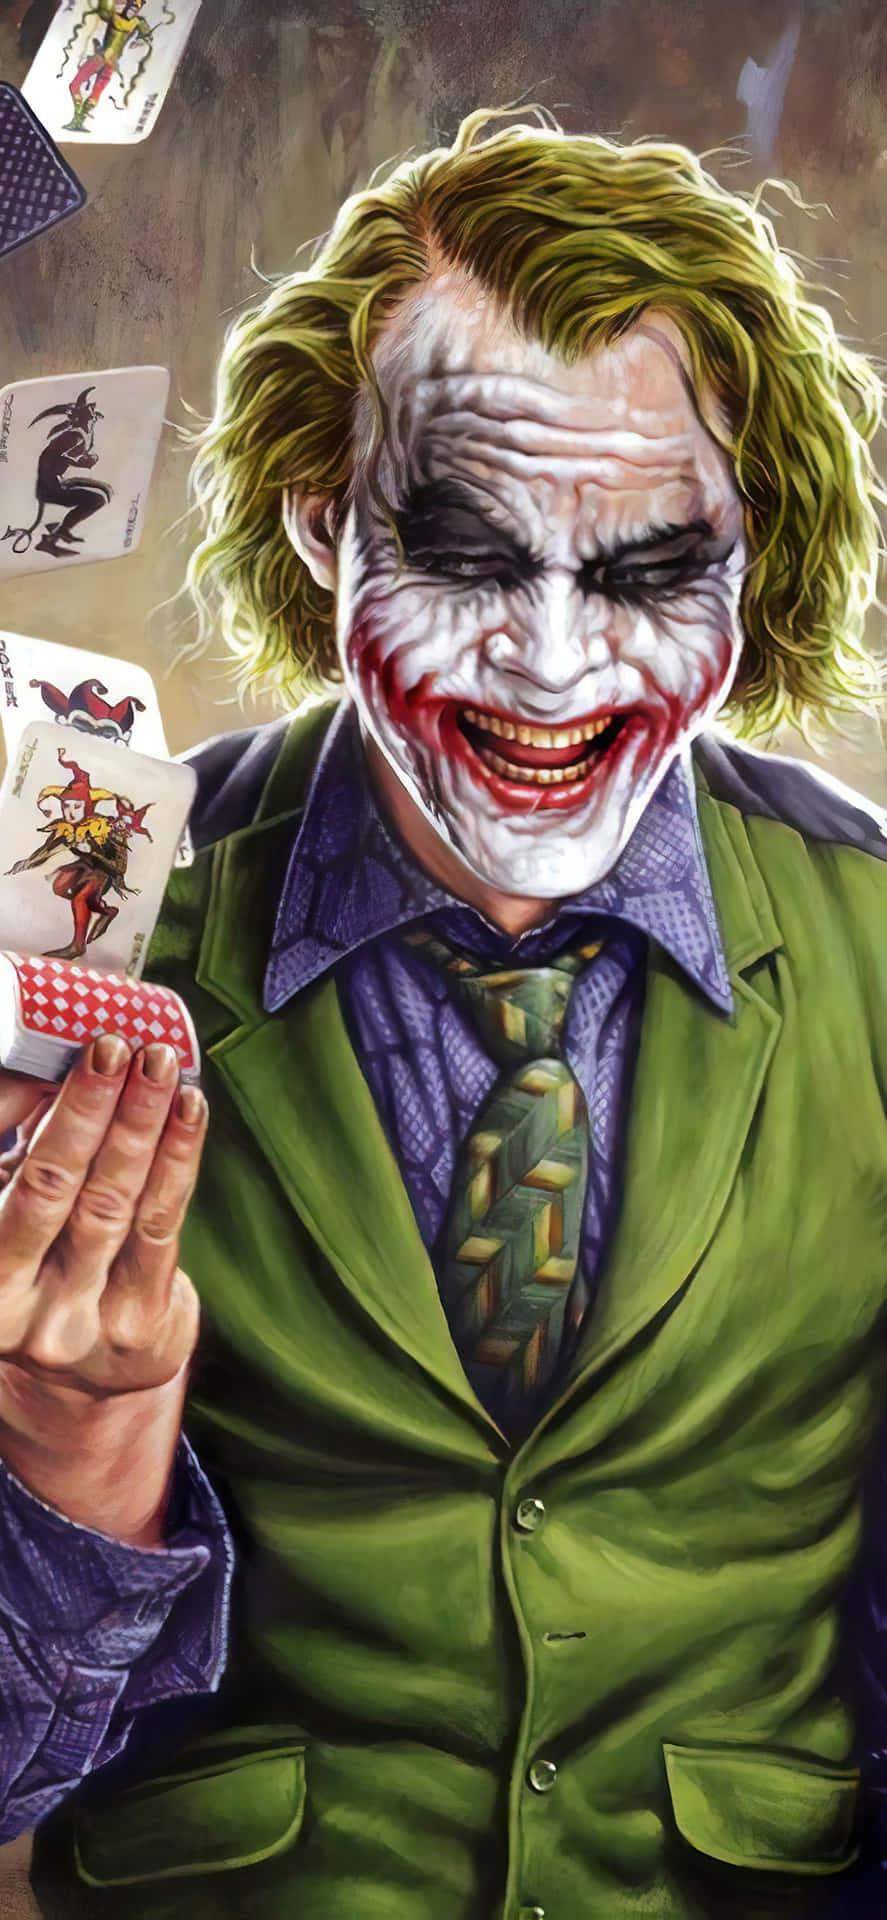 Caption: Mysterious Joker Card in the Dark Wallpaper